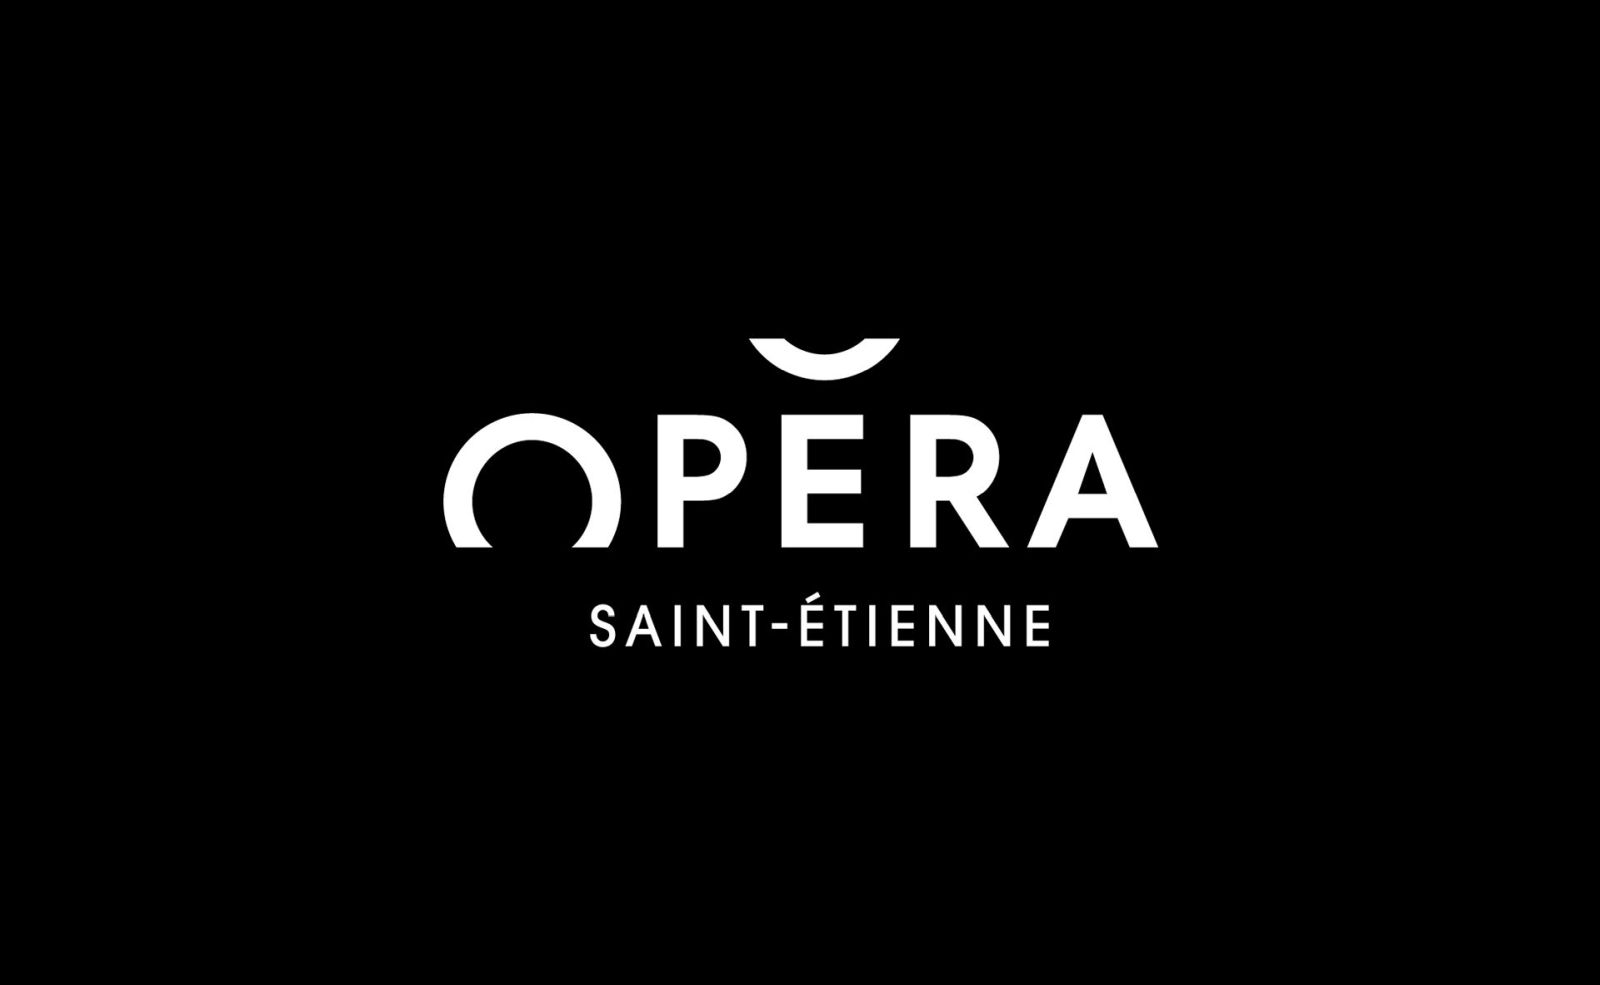 innovative brand design identity of saint etienne opera